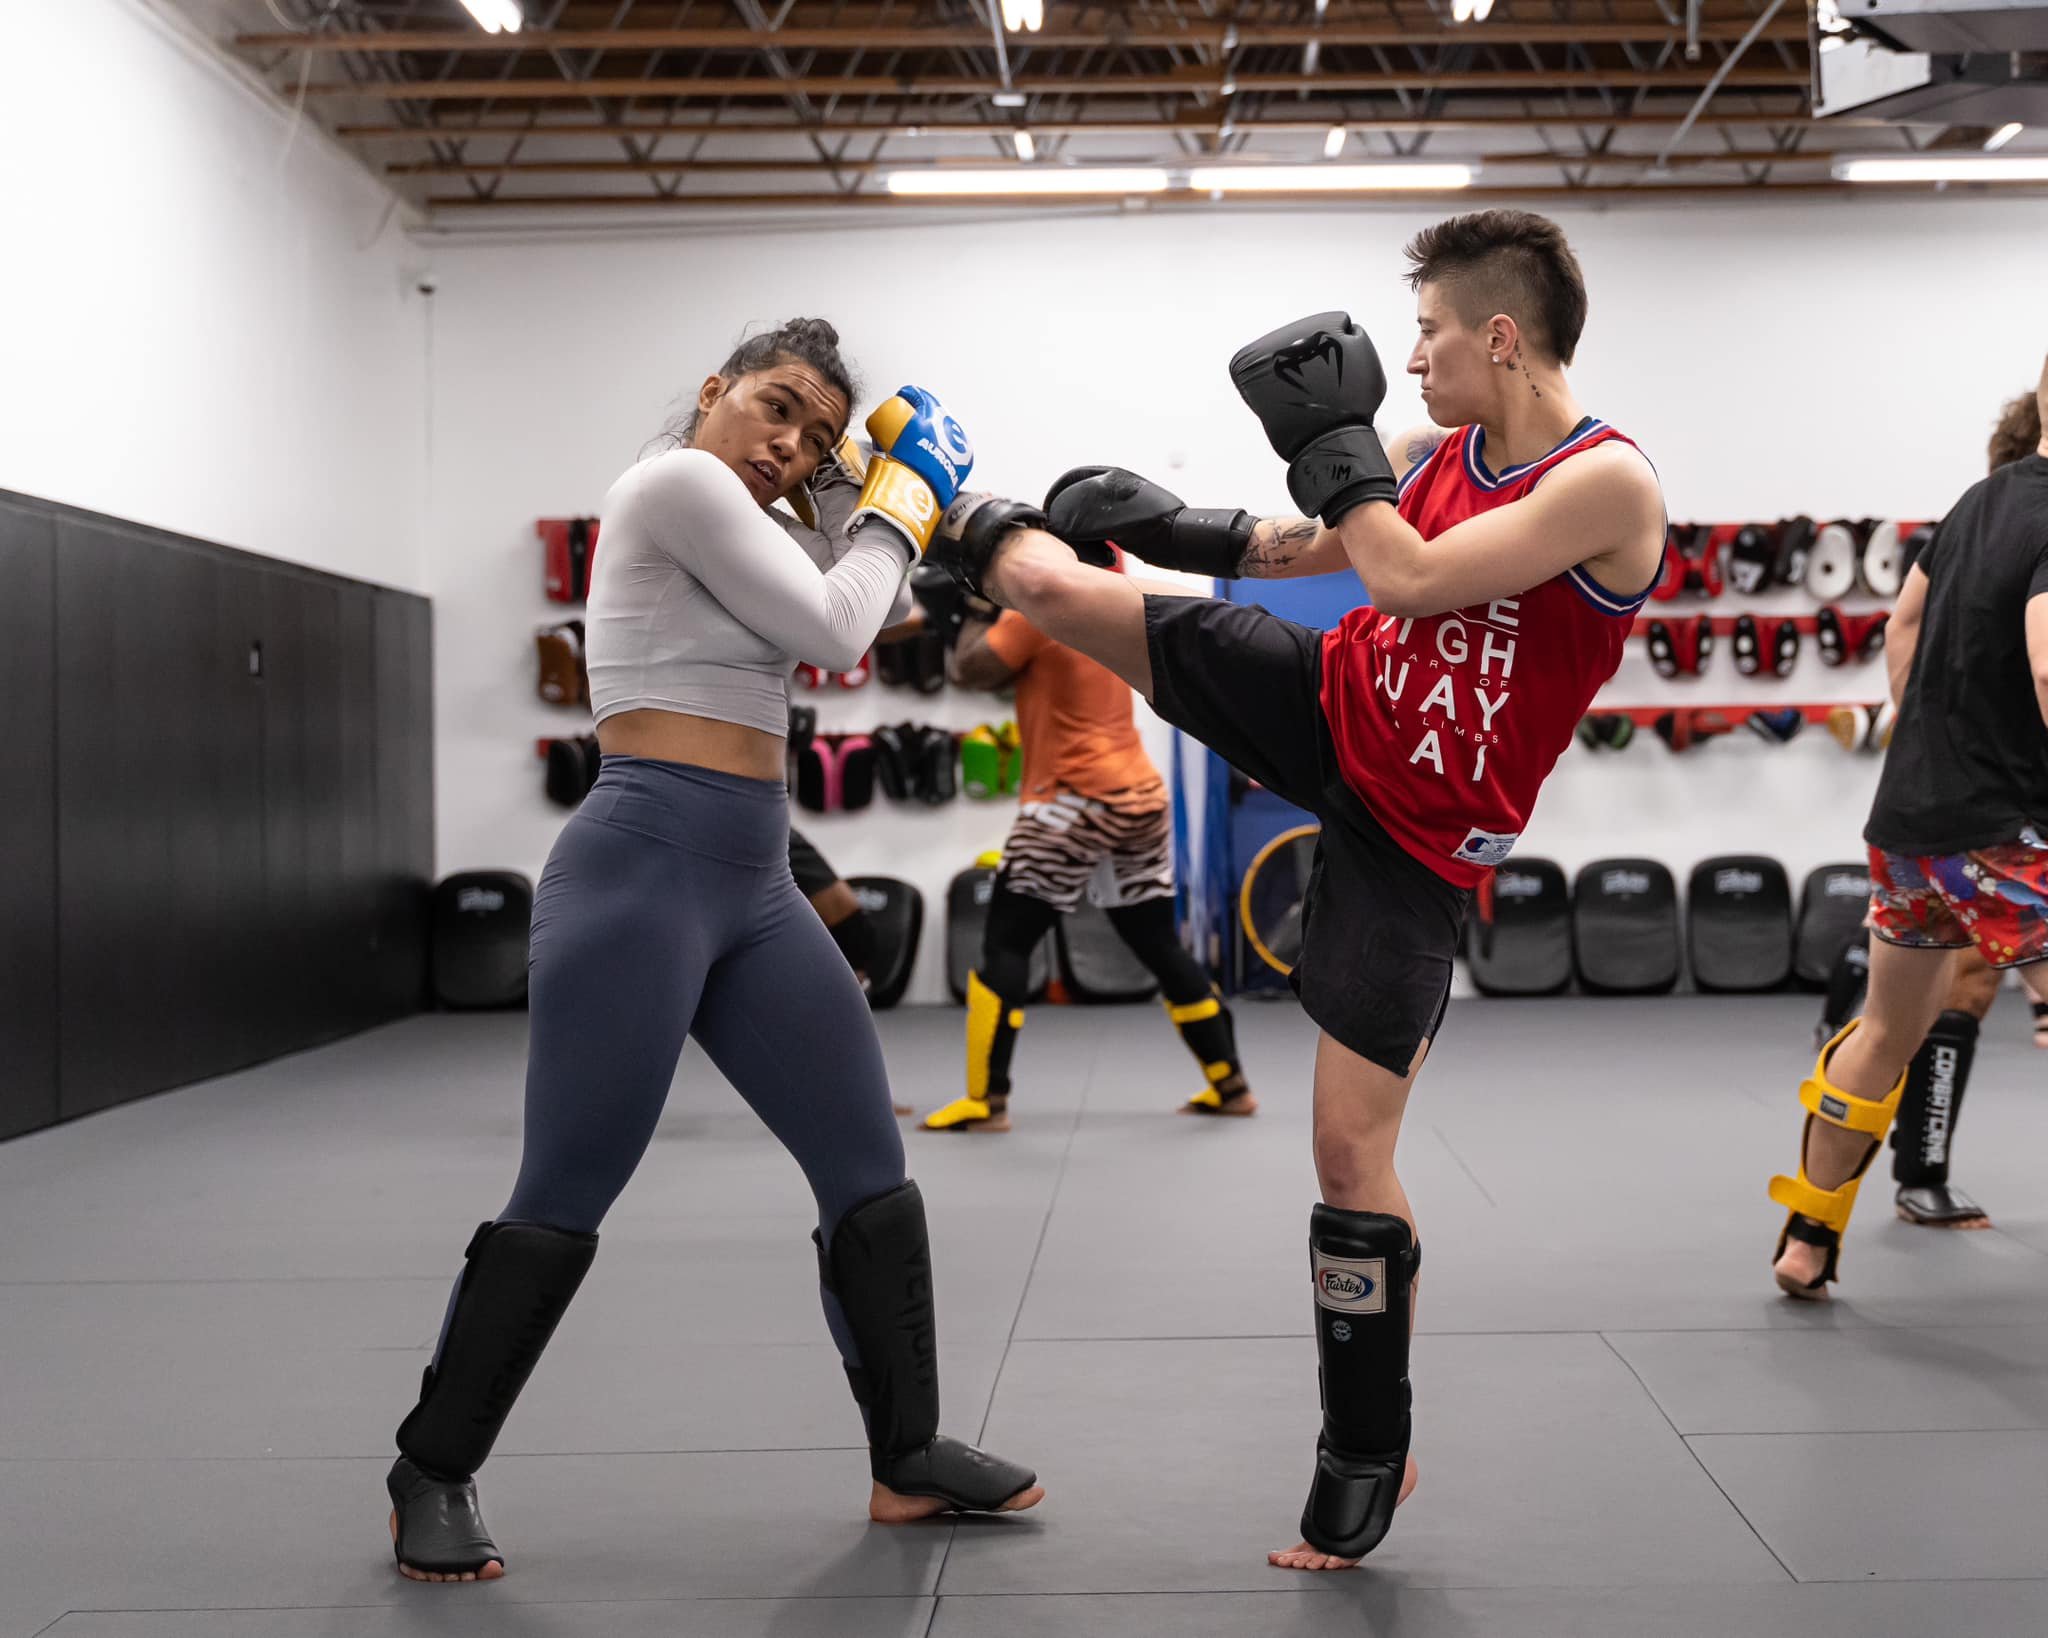 Premium Photo | Boxers training kickboxing in the ring